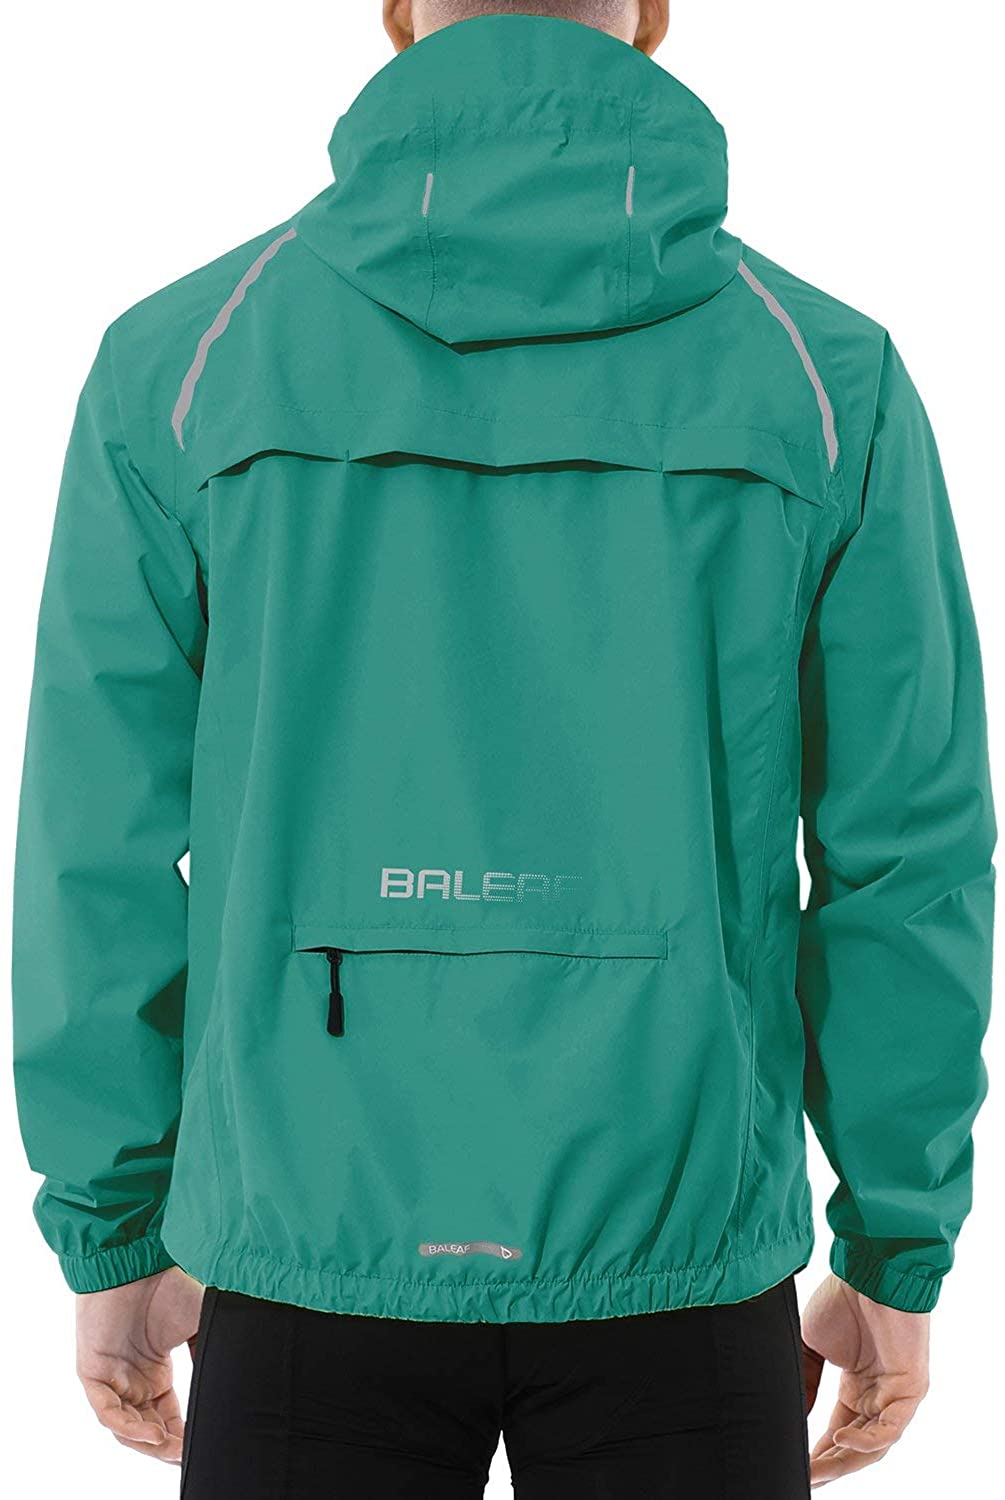 BALEAF Men's Cycling Running Jacket Waterproof Reflective Lightweight ...